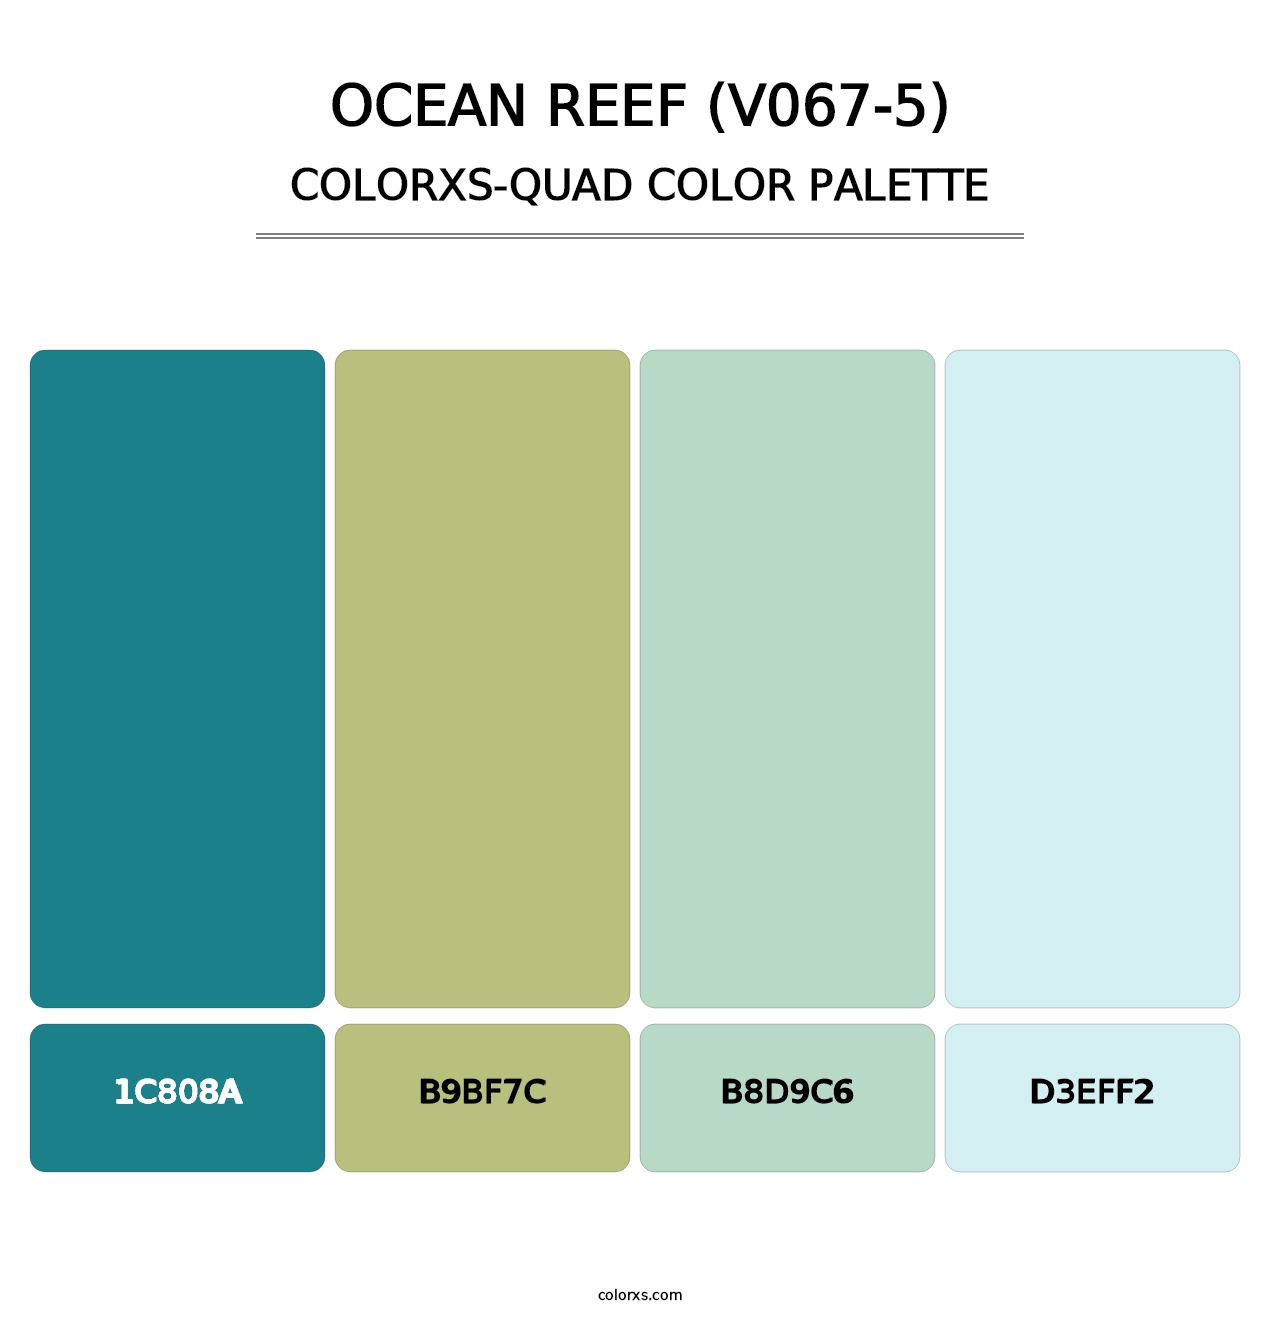 Ocean Reef (V067-5) - Colorxs Quad Palette